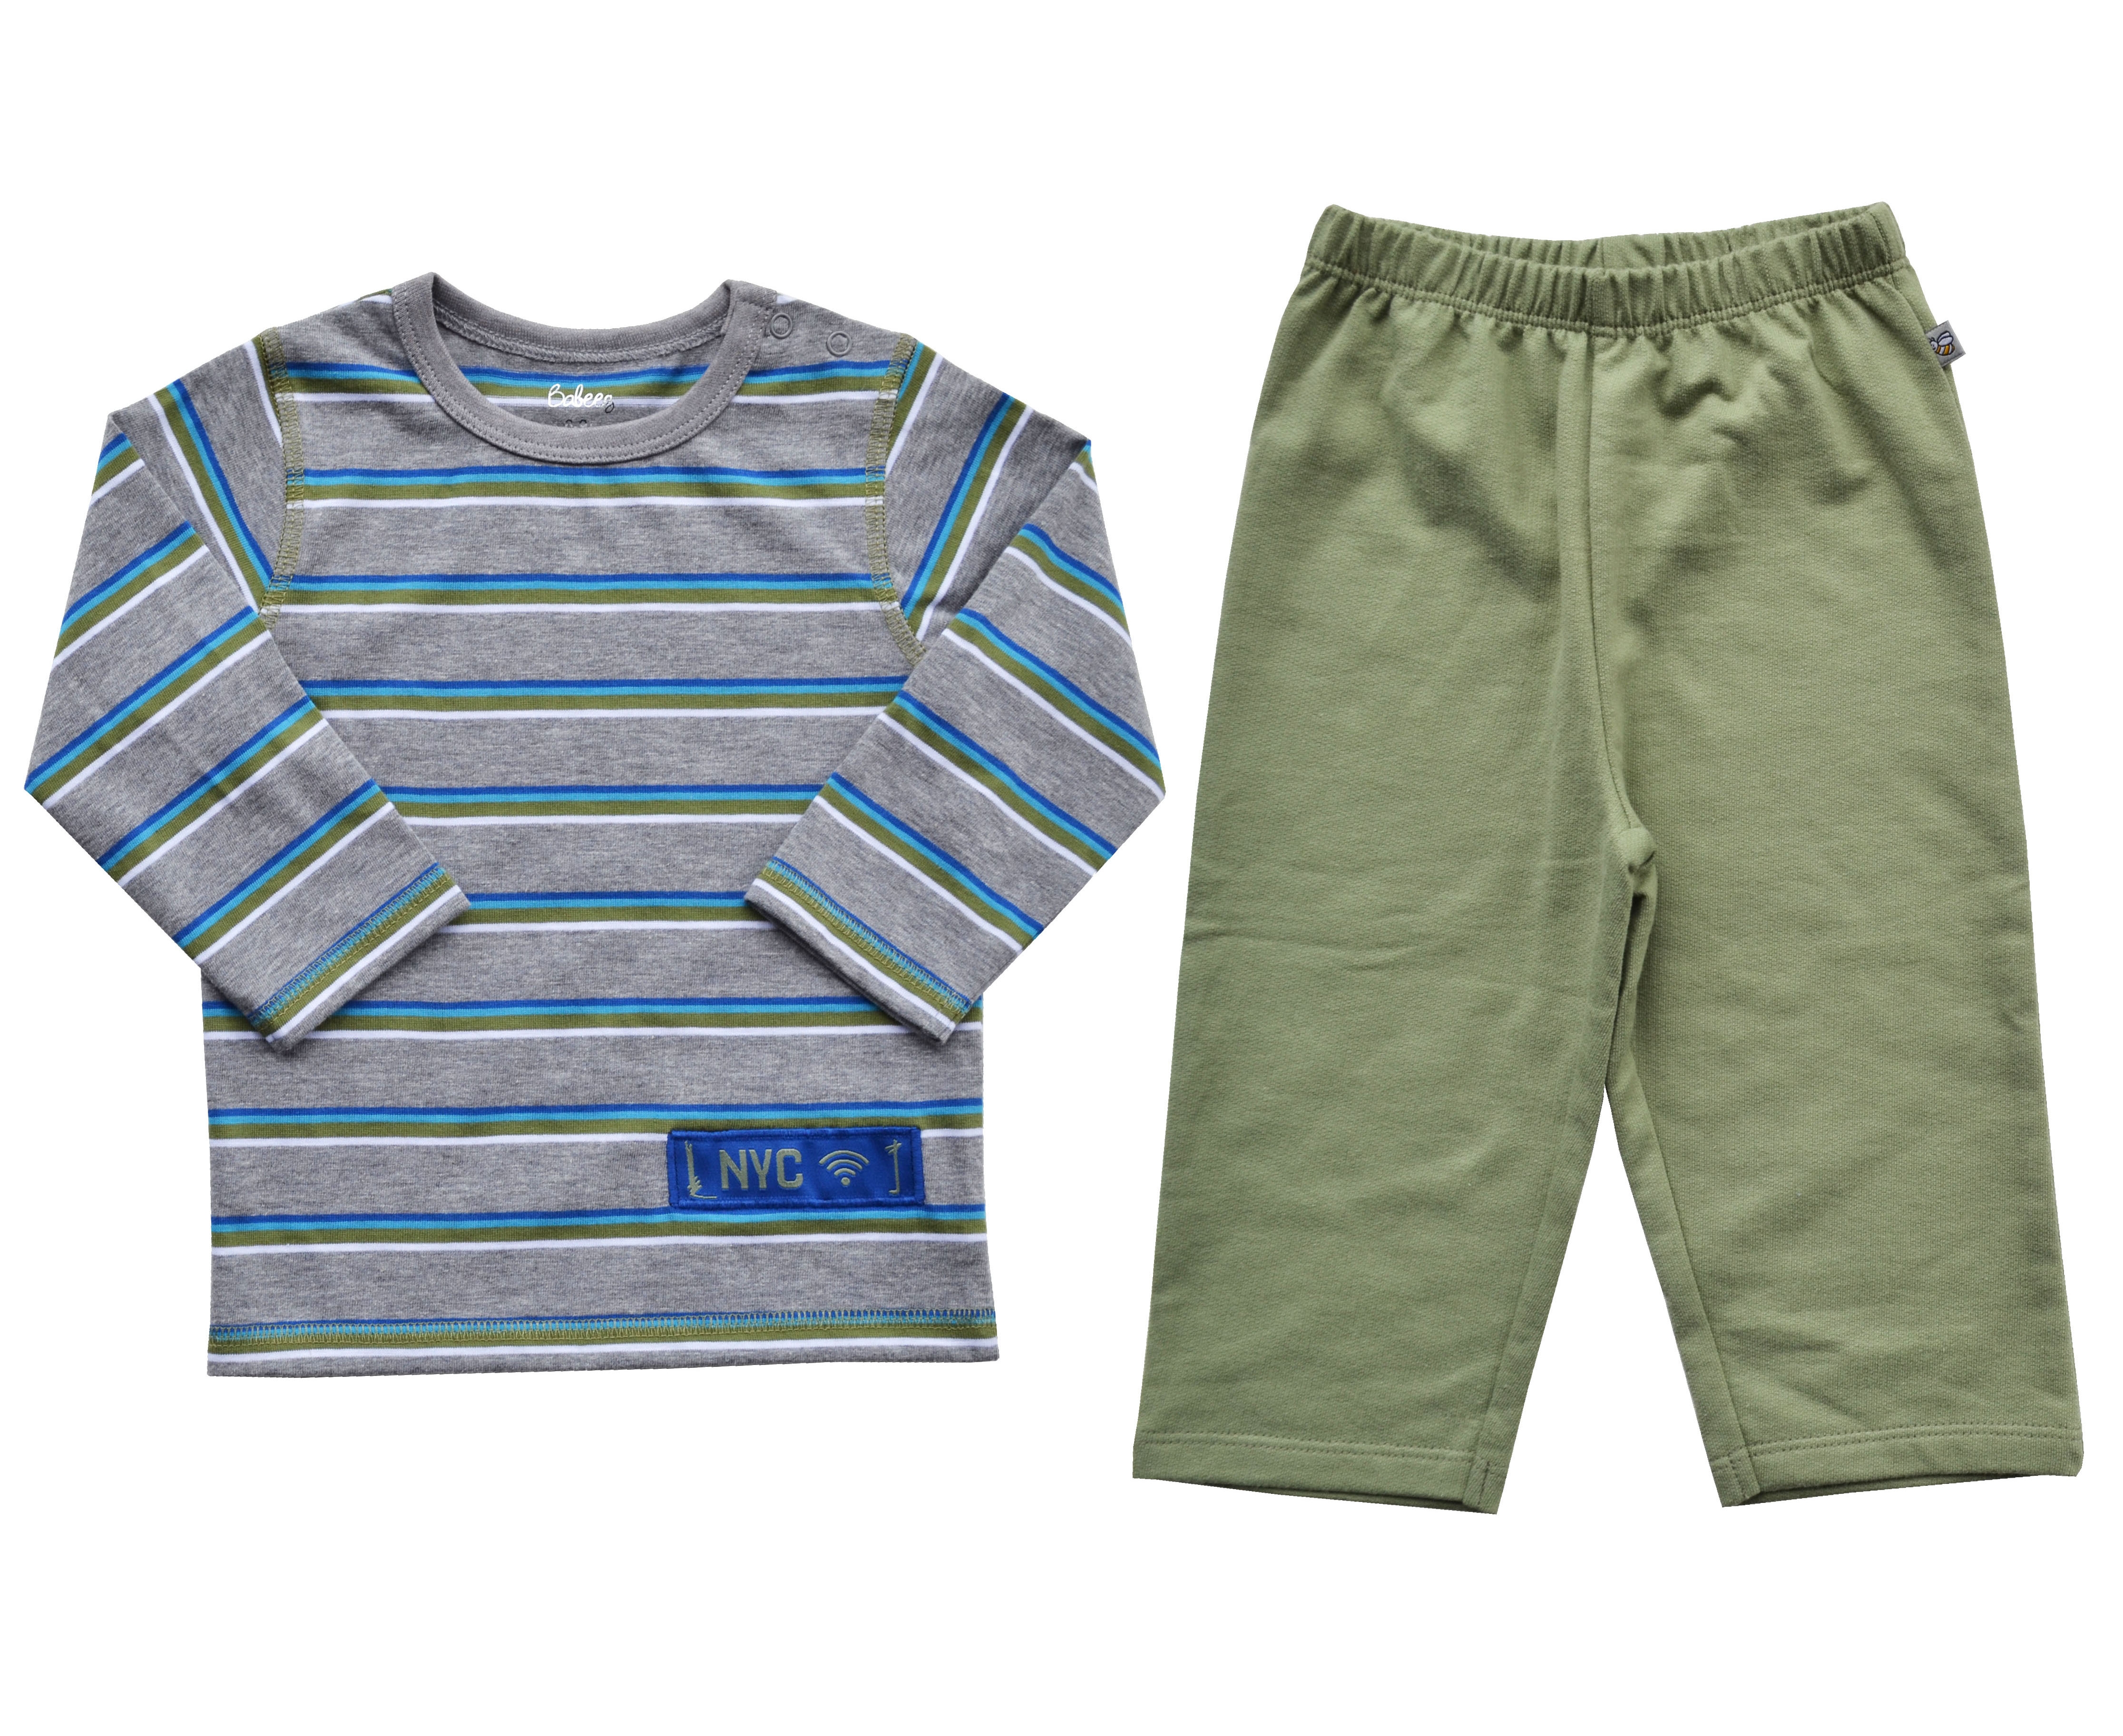 Grey Striped Full Sleeve T-Shirt + Green Long Pant Set (100% Cotton Jersey)